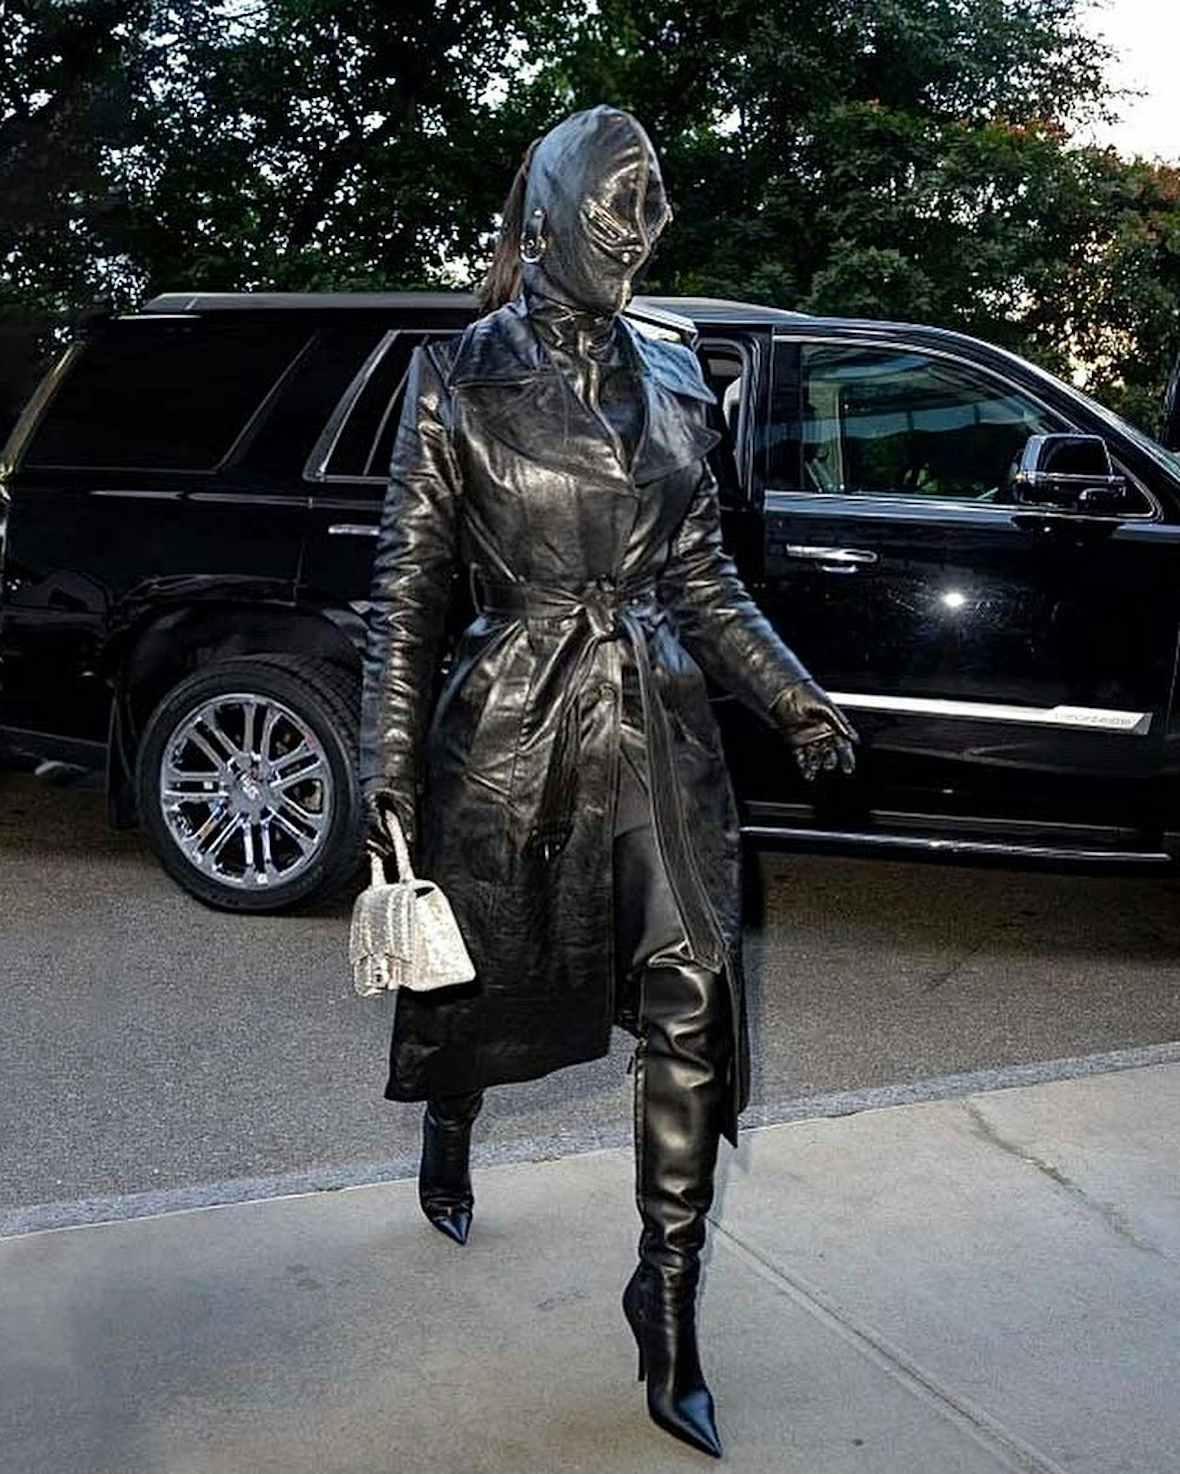 Fetish fashion is back thanks to Kim Kardashian - The Face